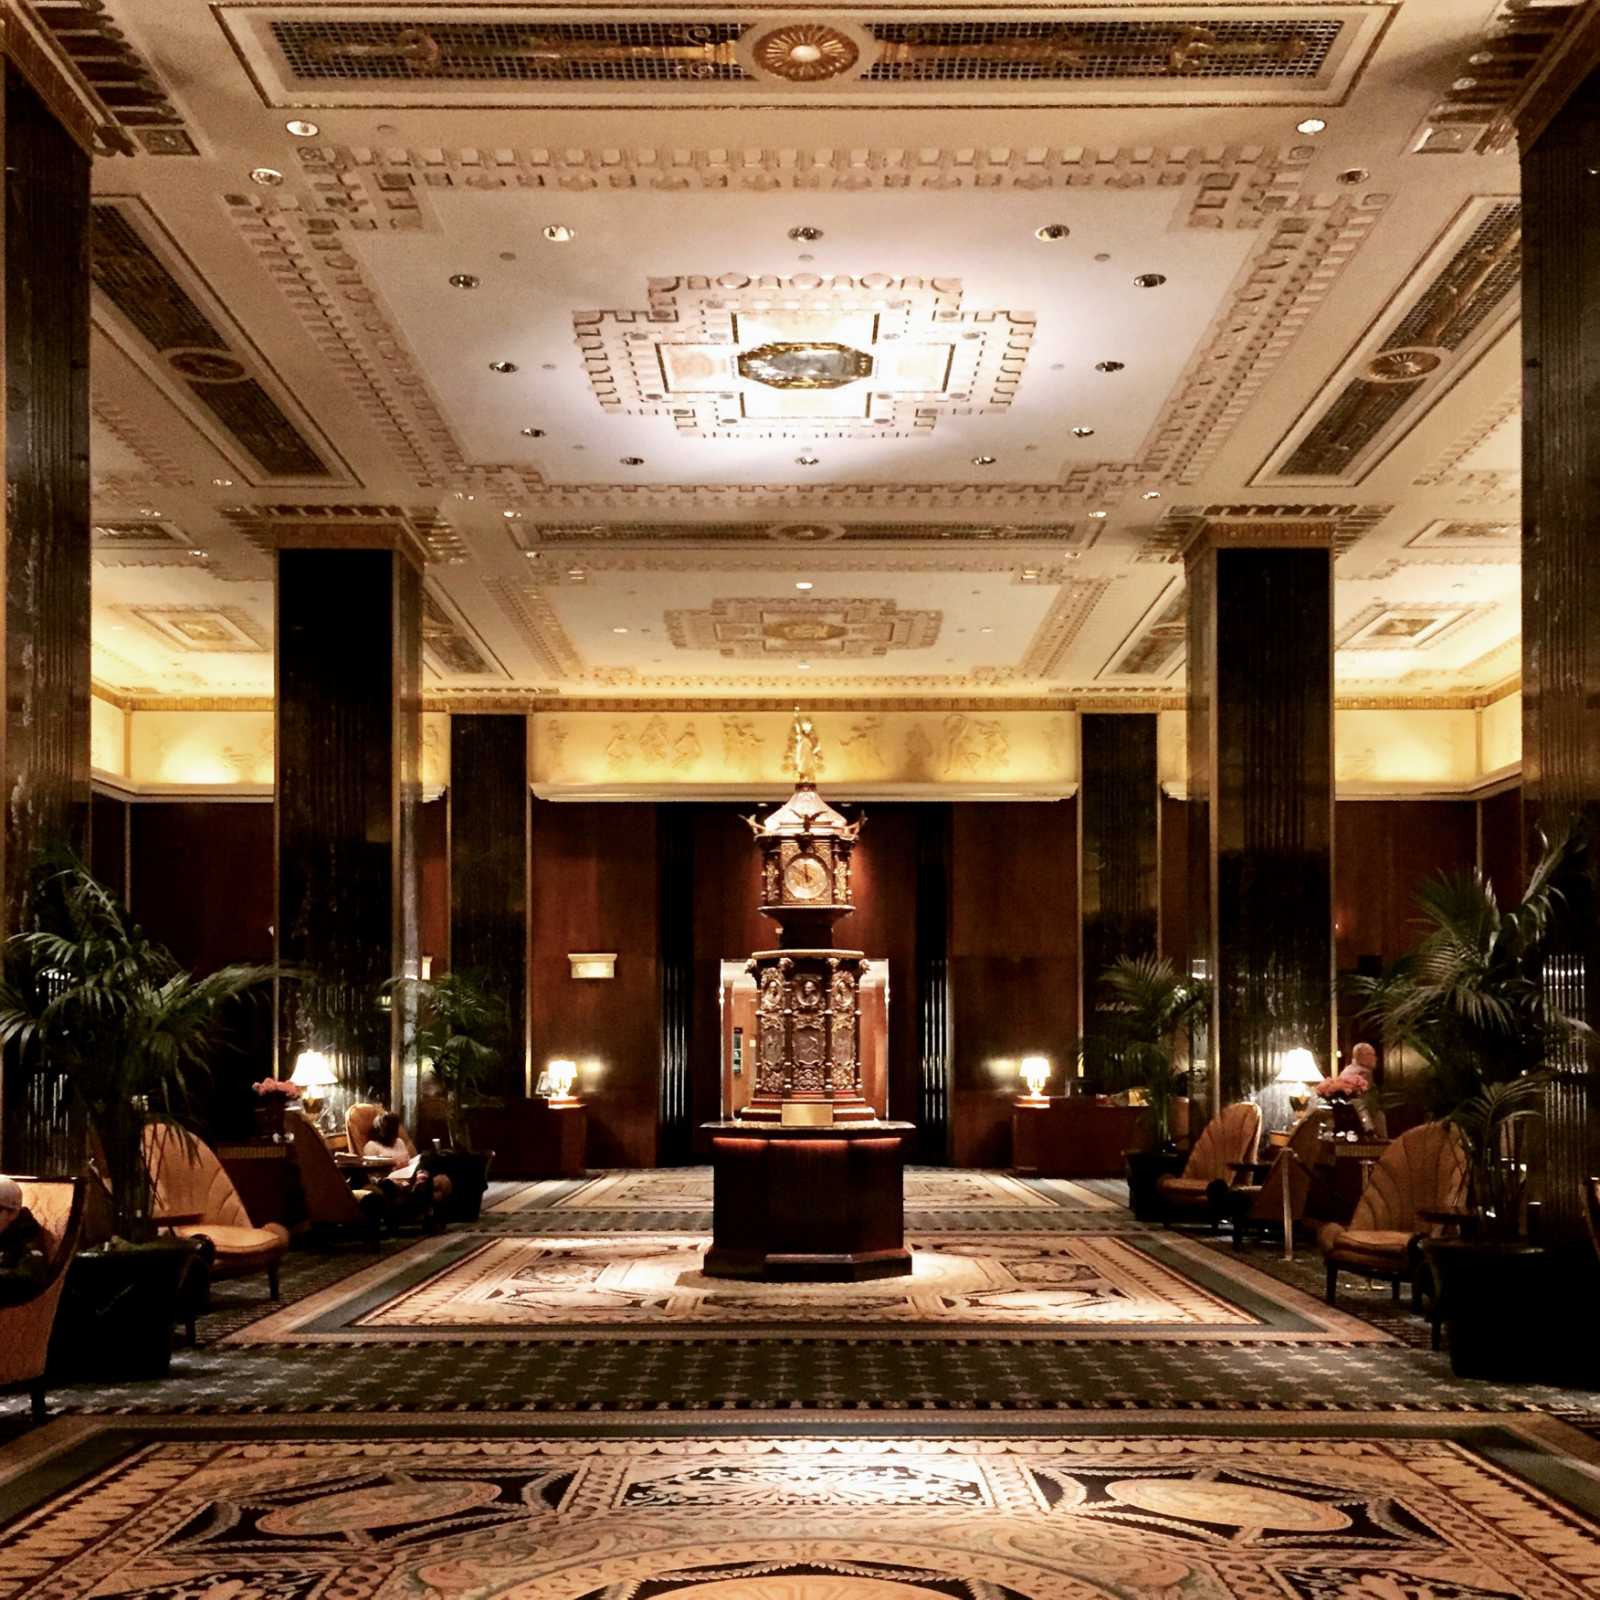 Lobby of Waldorf Astoria, New York